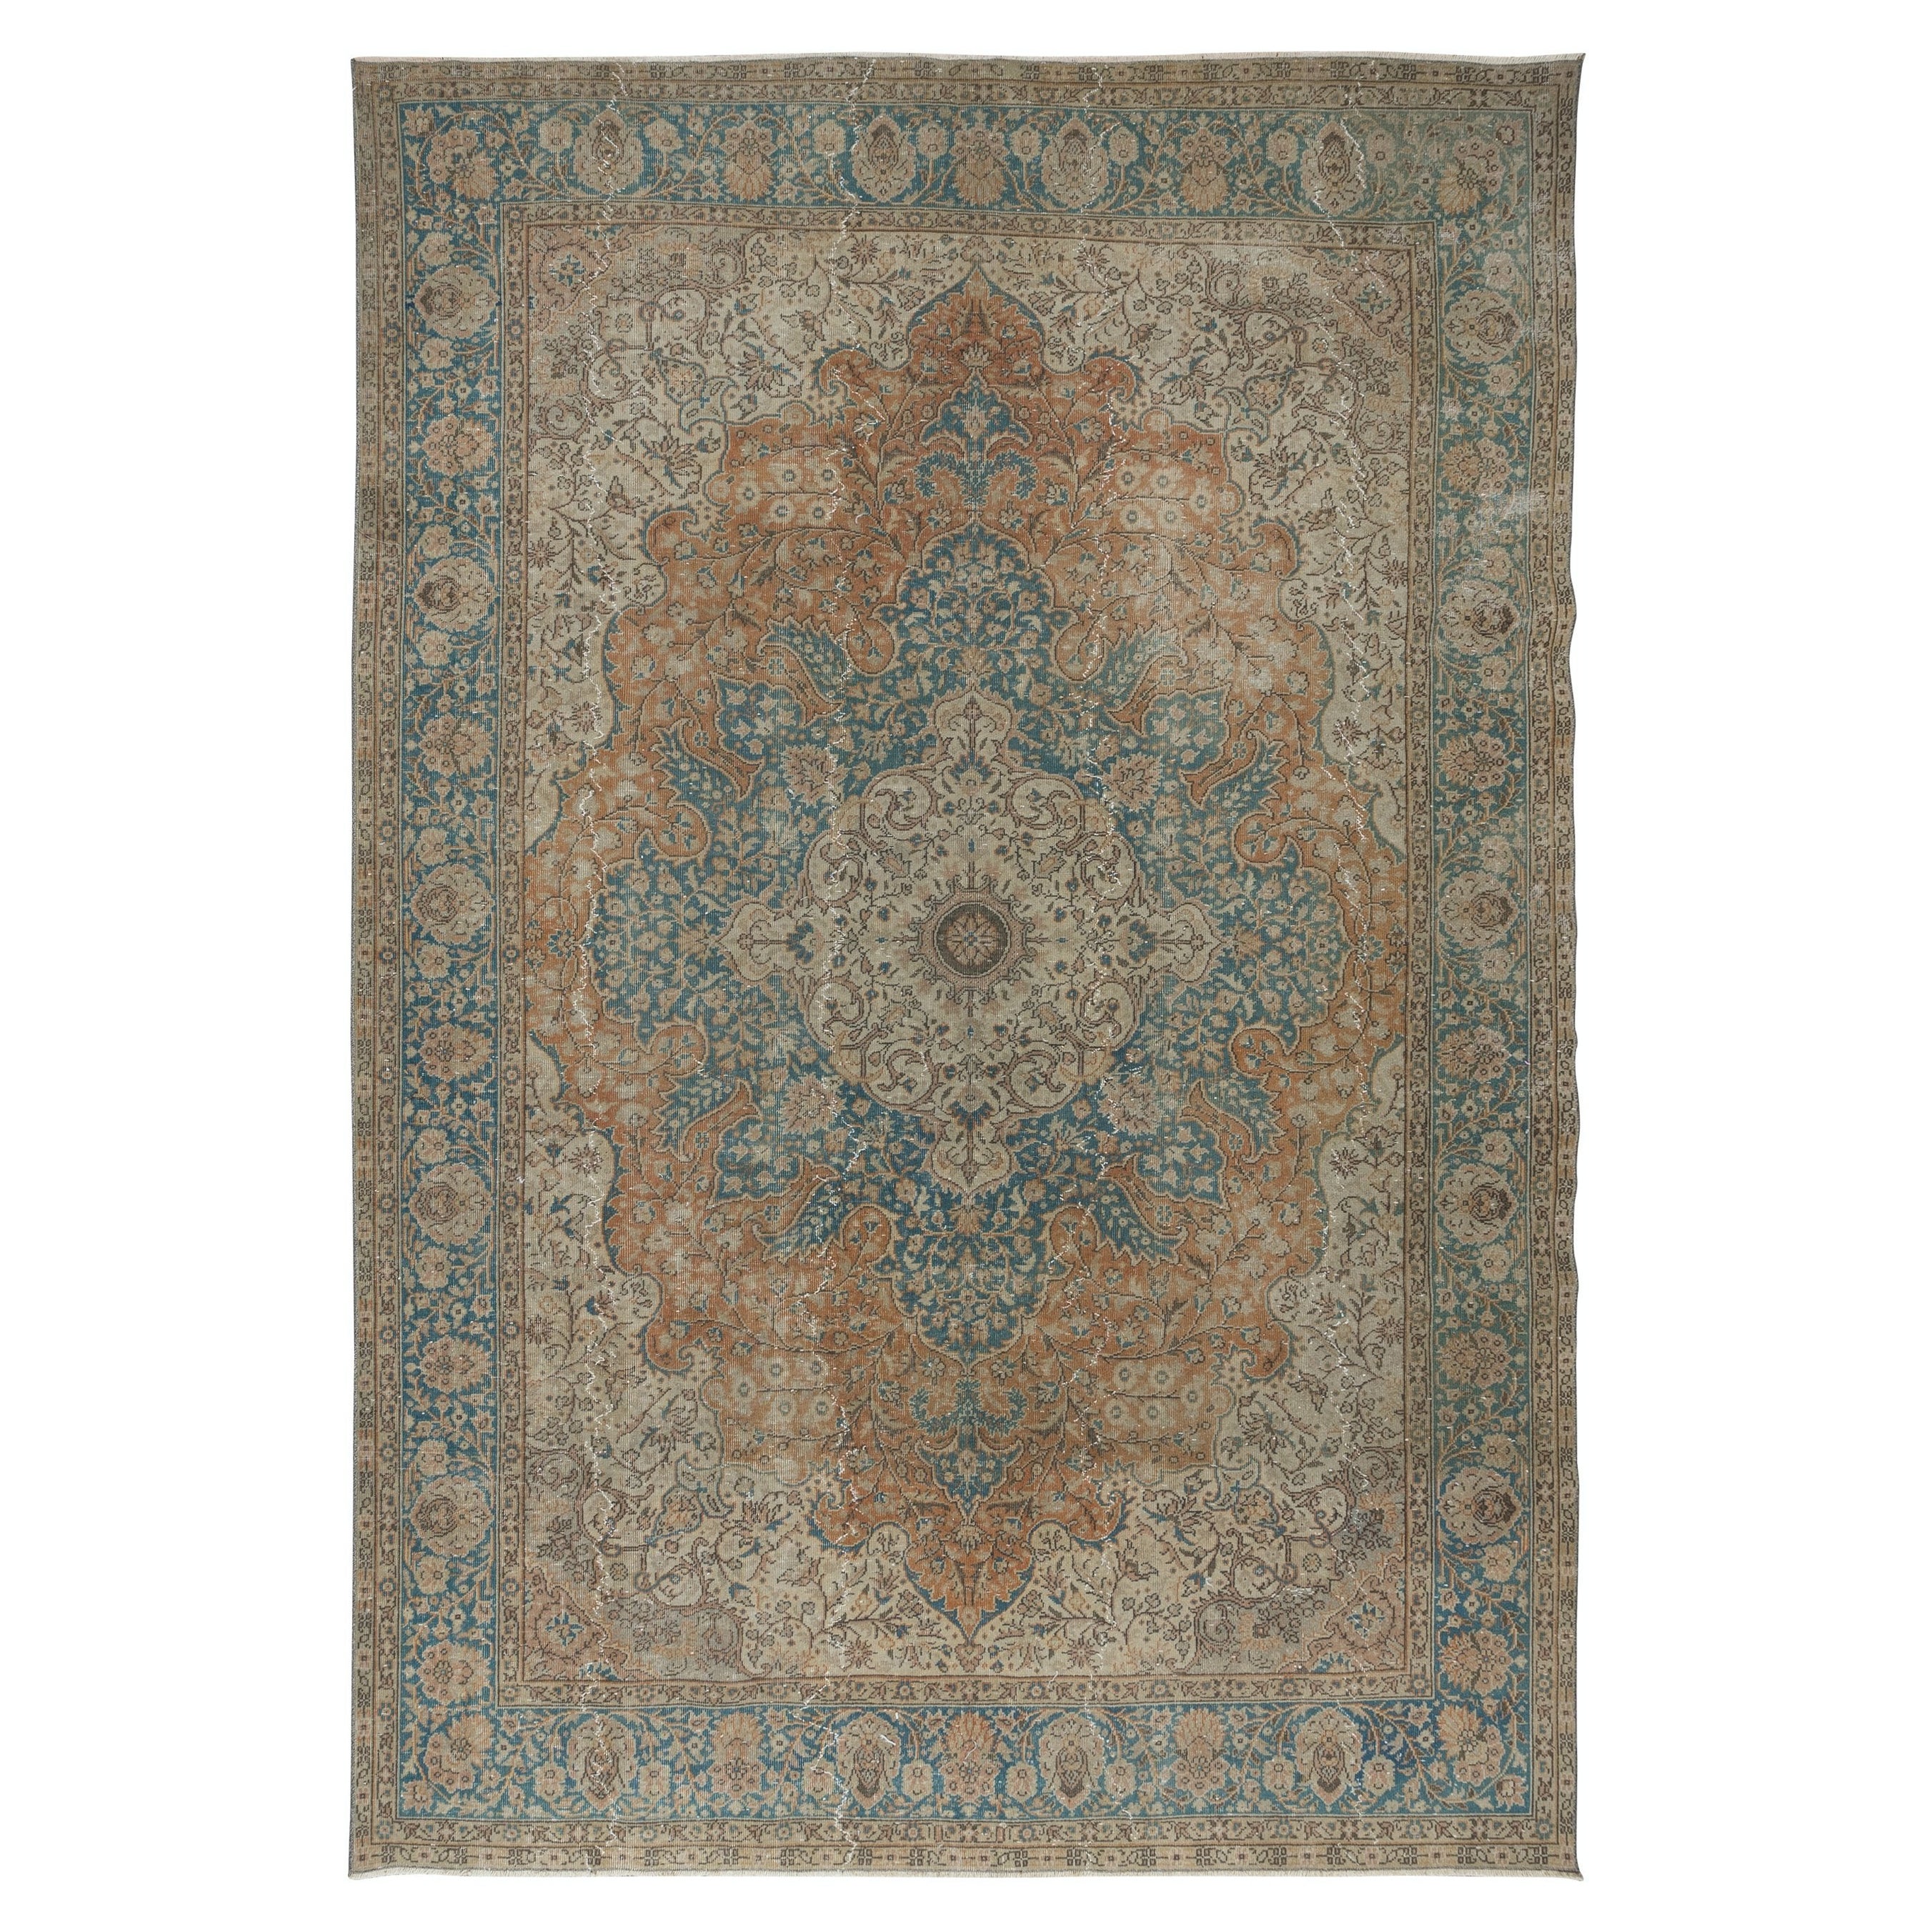 8x11.6 Ft One-of-a-Kind Vintage Oriental Rug, Handmade Turkish Village Carpet